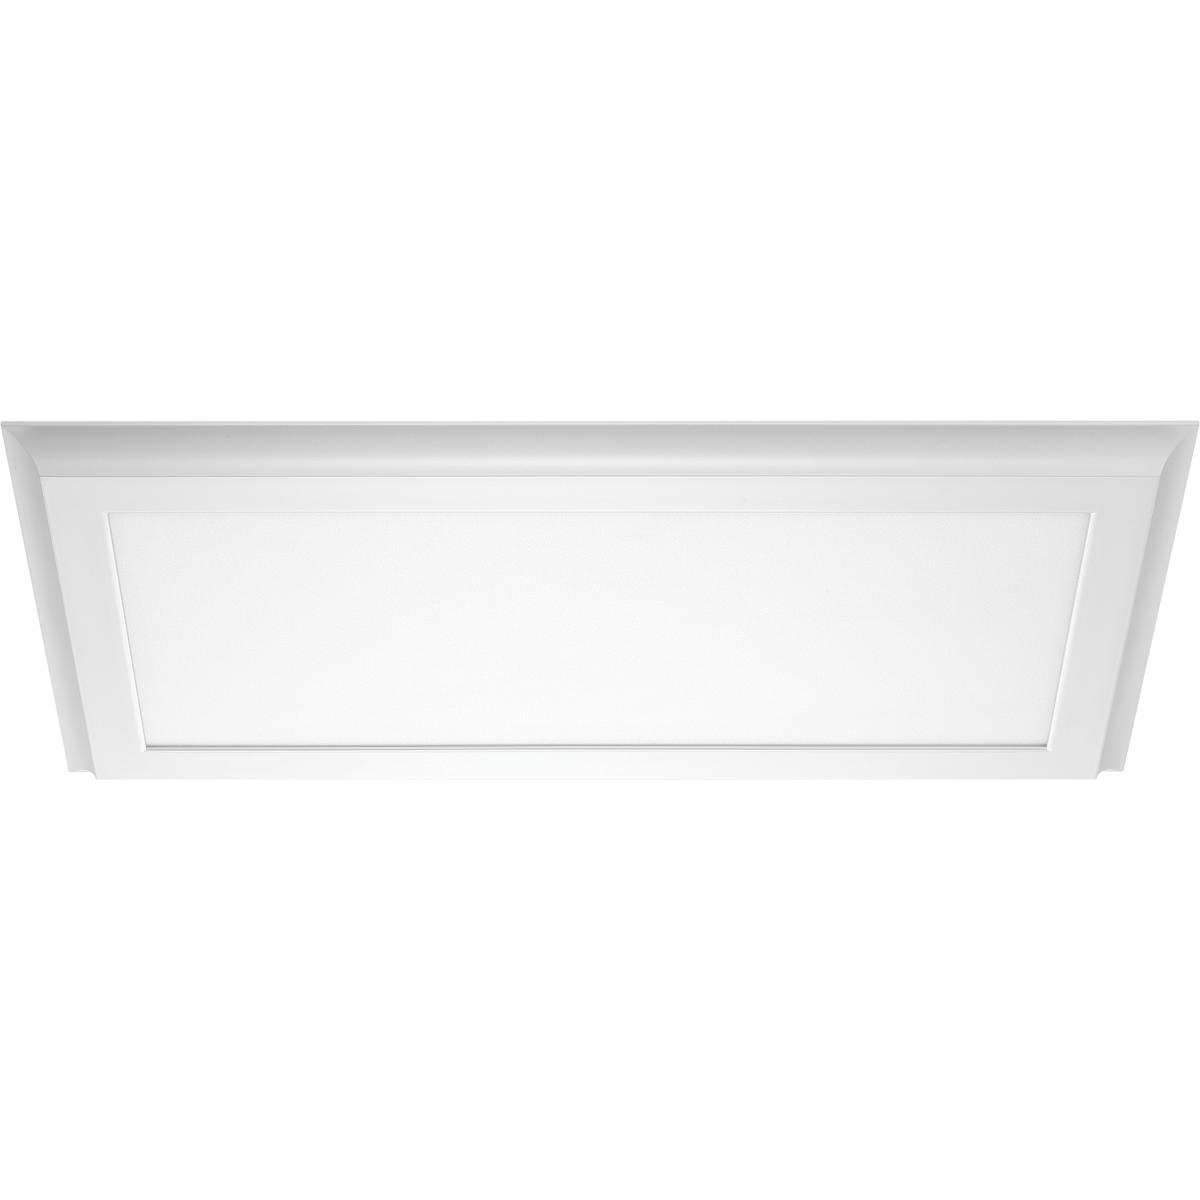 12" X 25" Surface LED Fixture - White 100-277V Ceiling Nuvo Lighting 3000K 